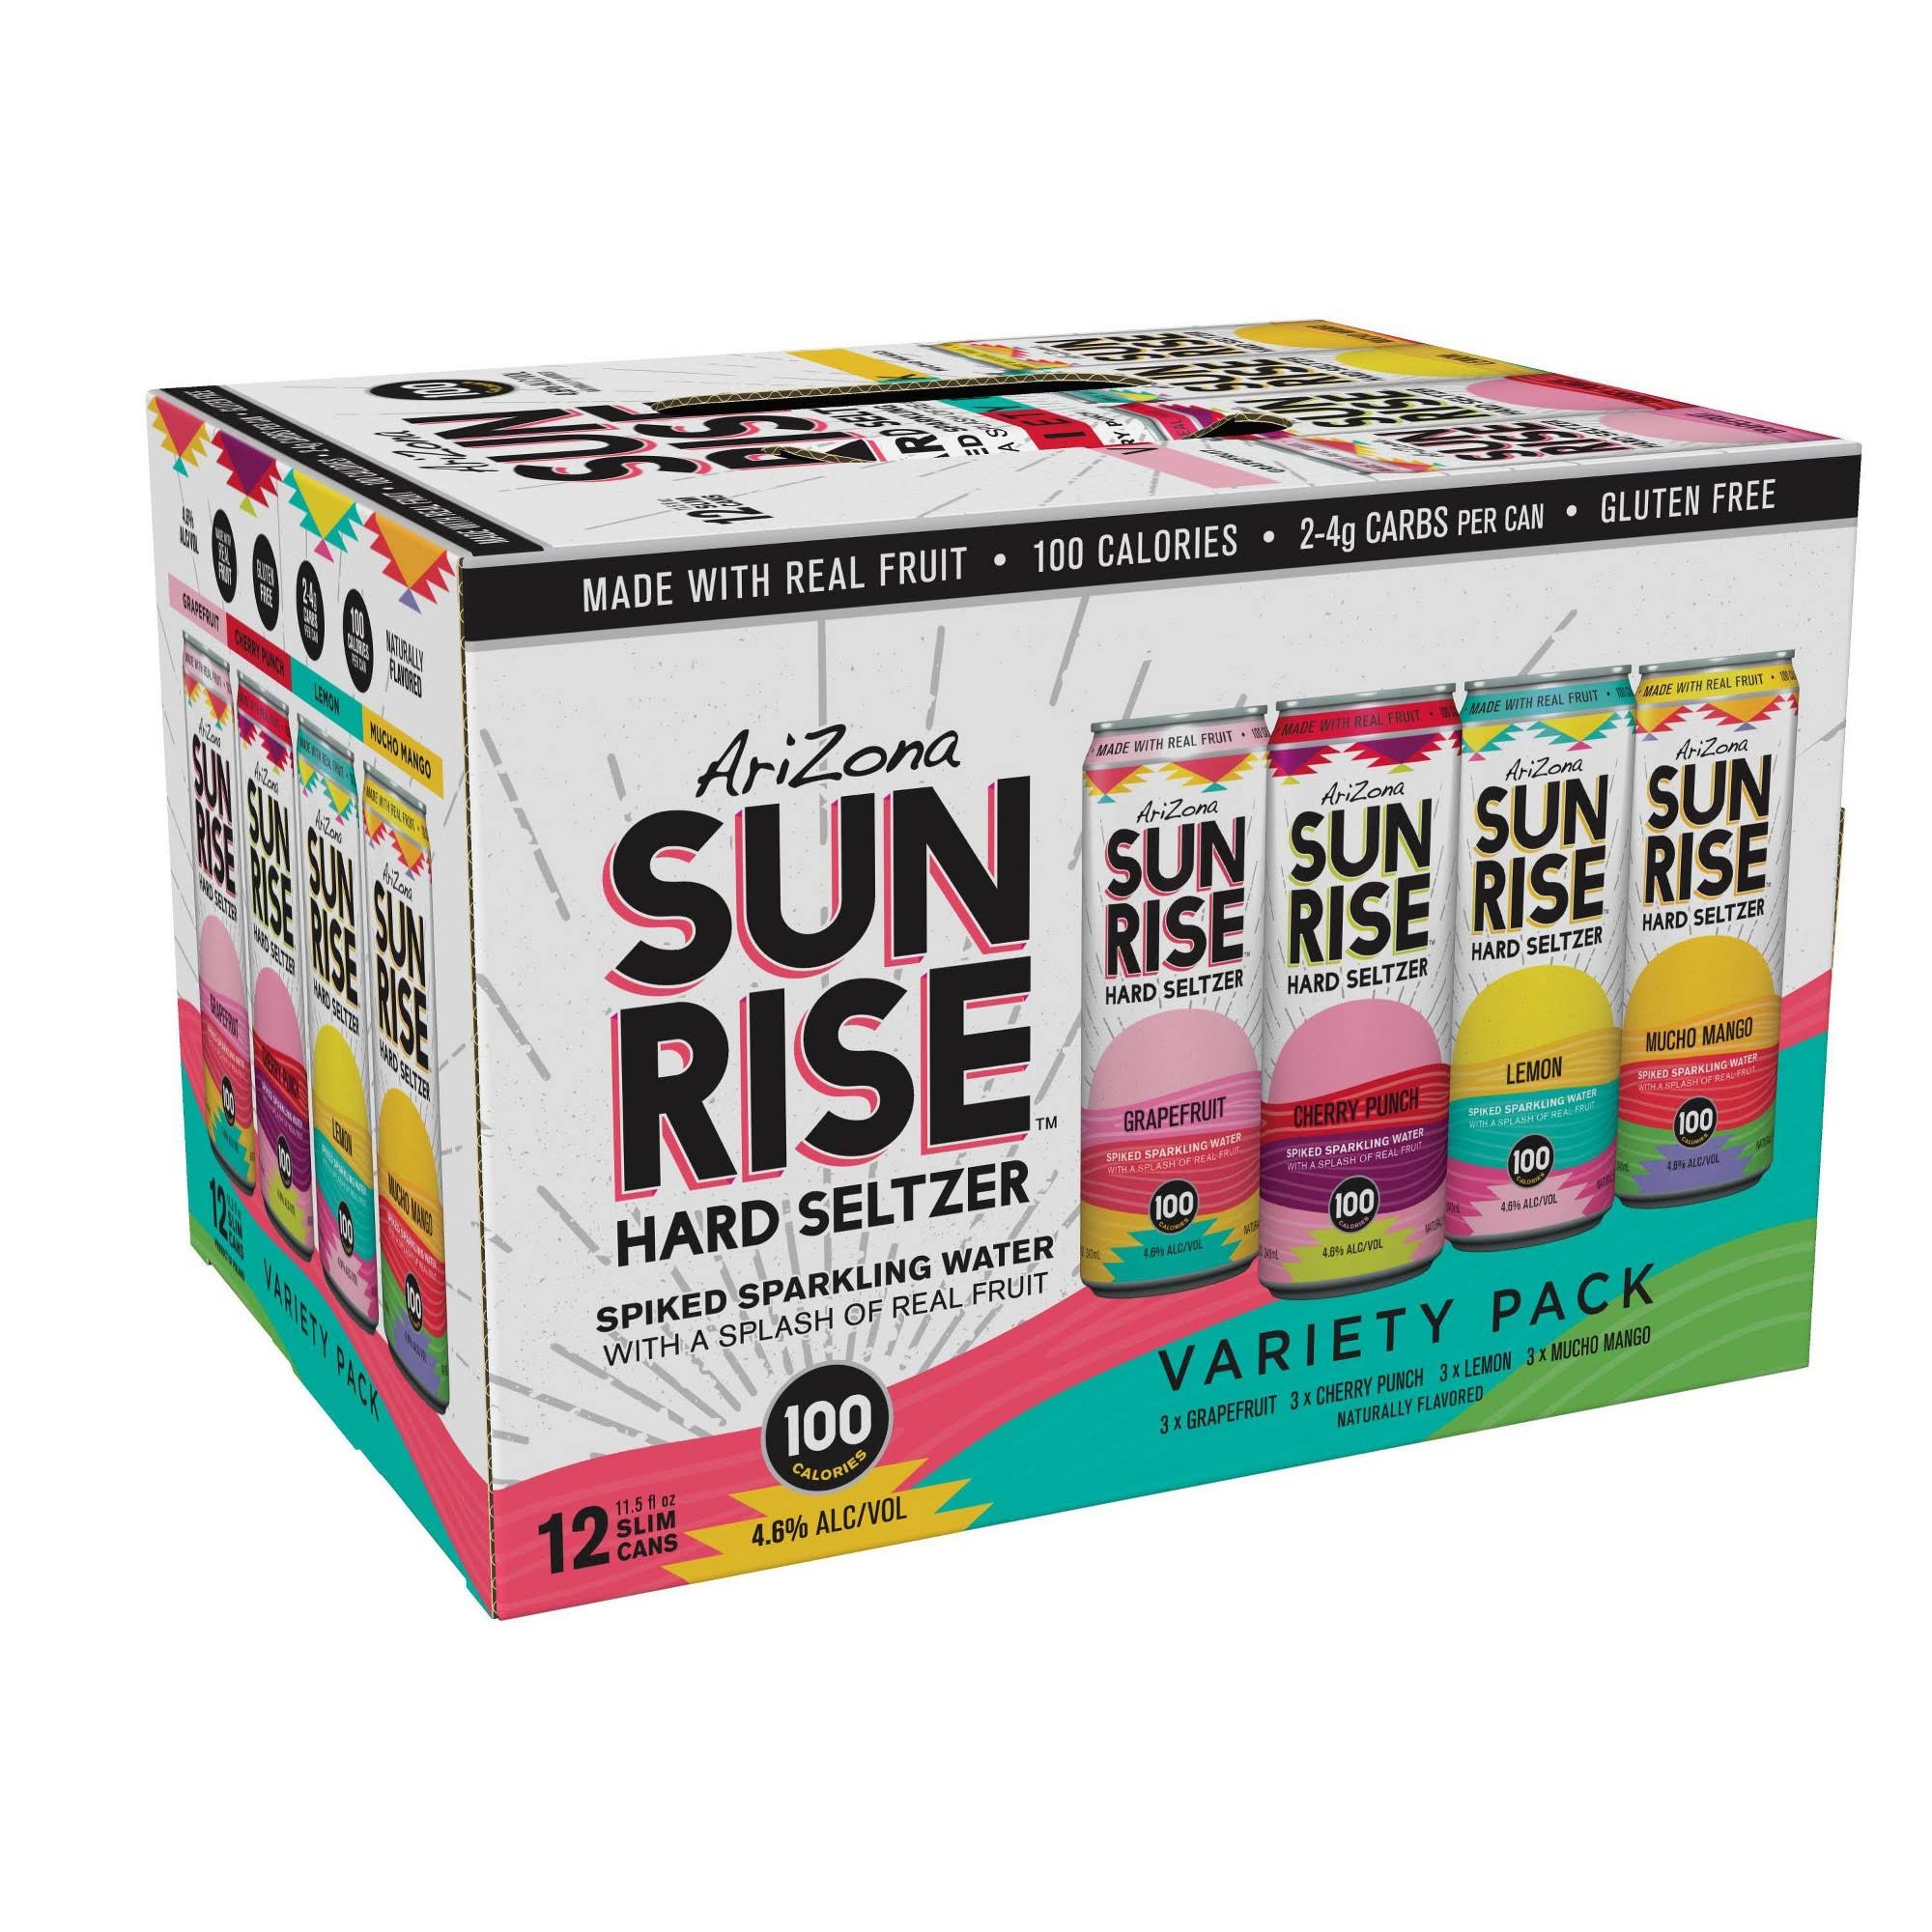 Arizona Sunrise Hard Seltzer, Variety Pack - 12 pack, 11.5 fl oz cans